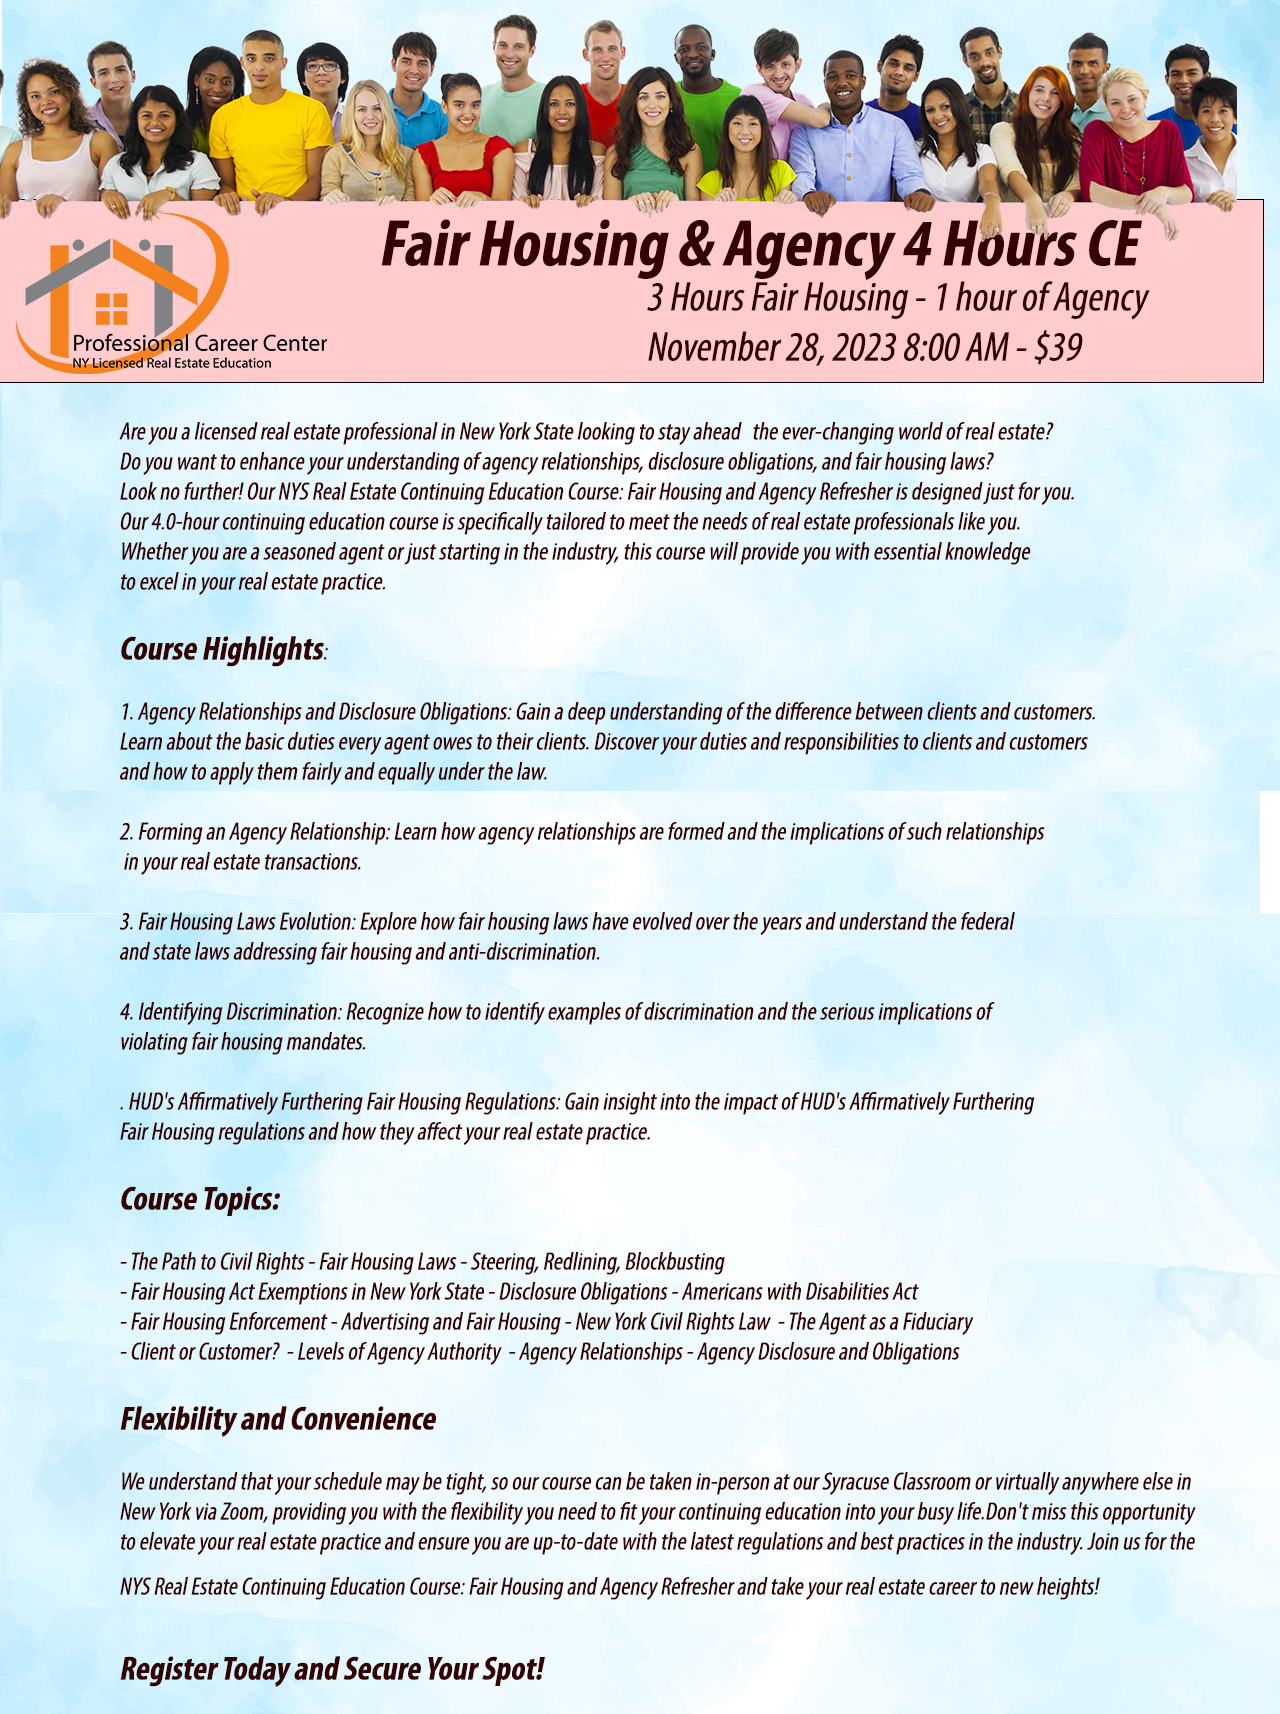 Fair Housing Agency Refresher CE Course